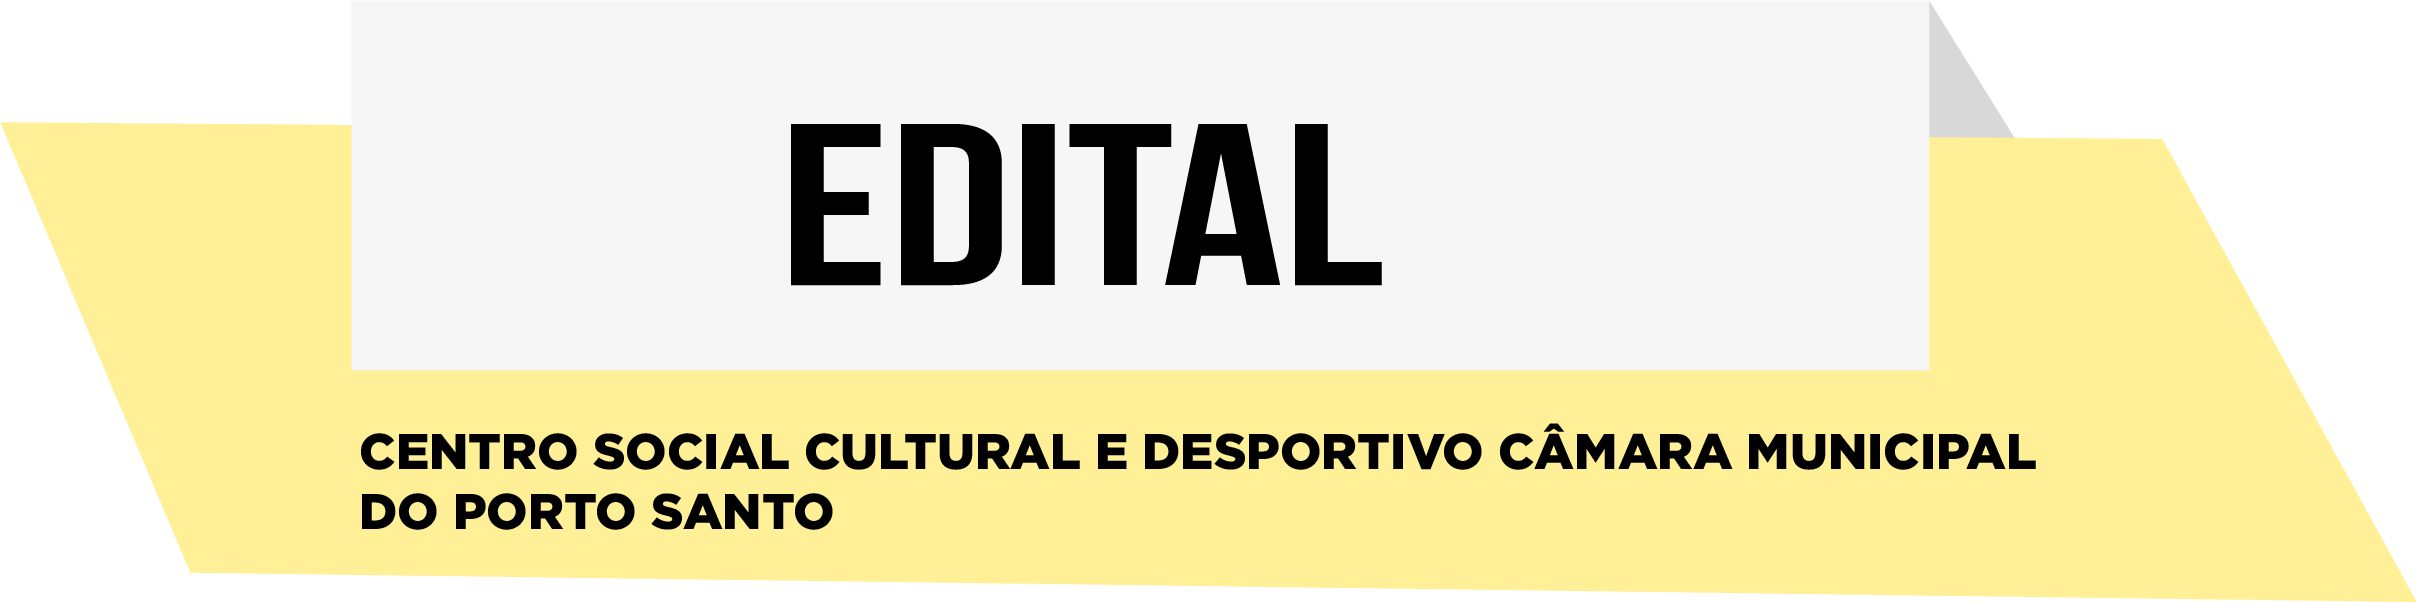 EDITAL-Centro Social Cultural e Desportivo Câmara Municipal do Porto Santo